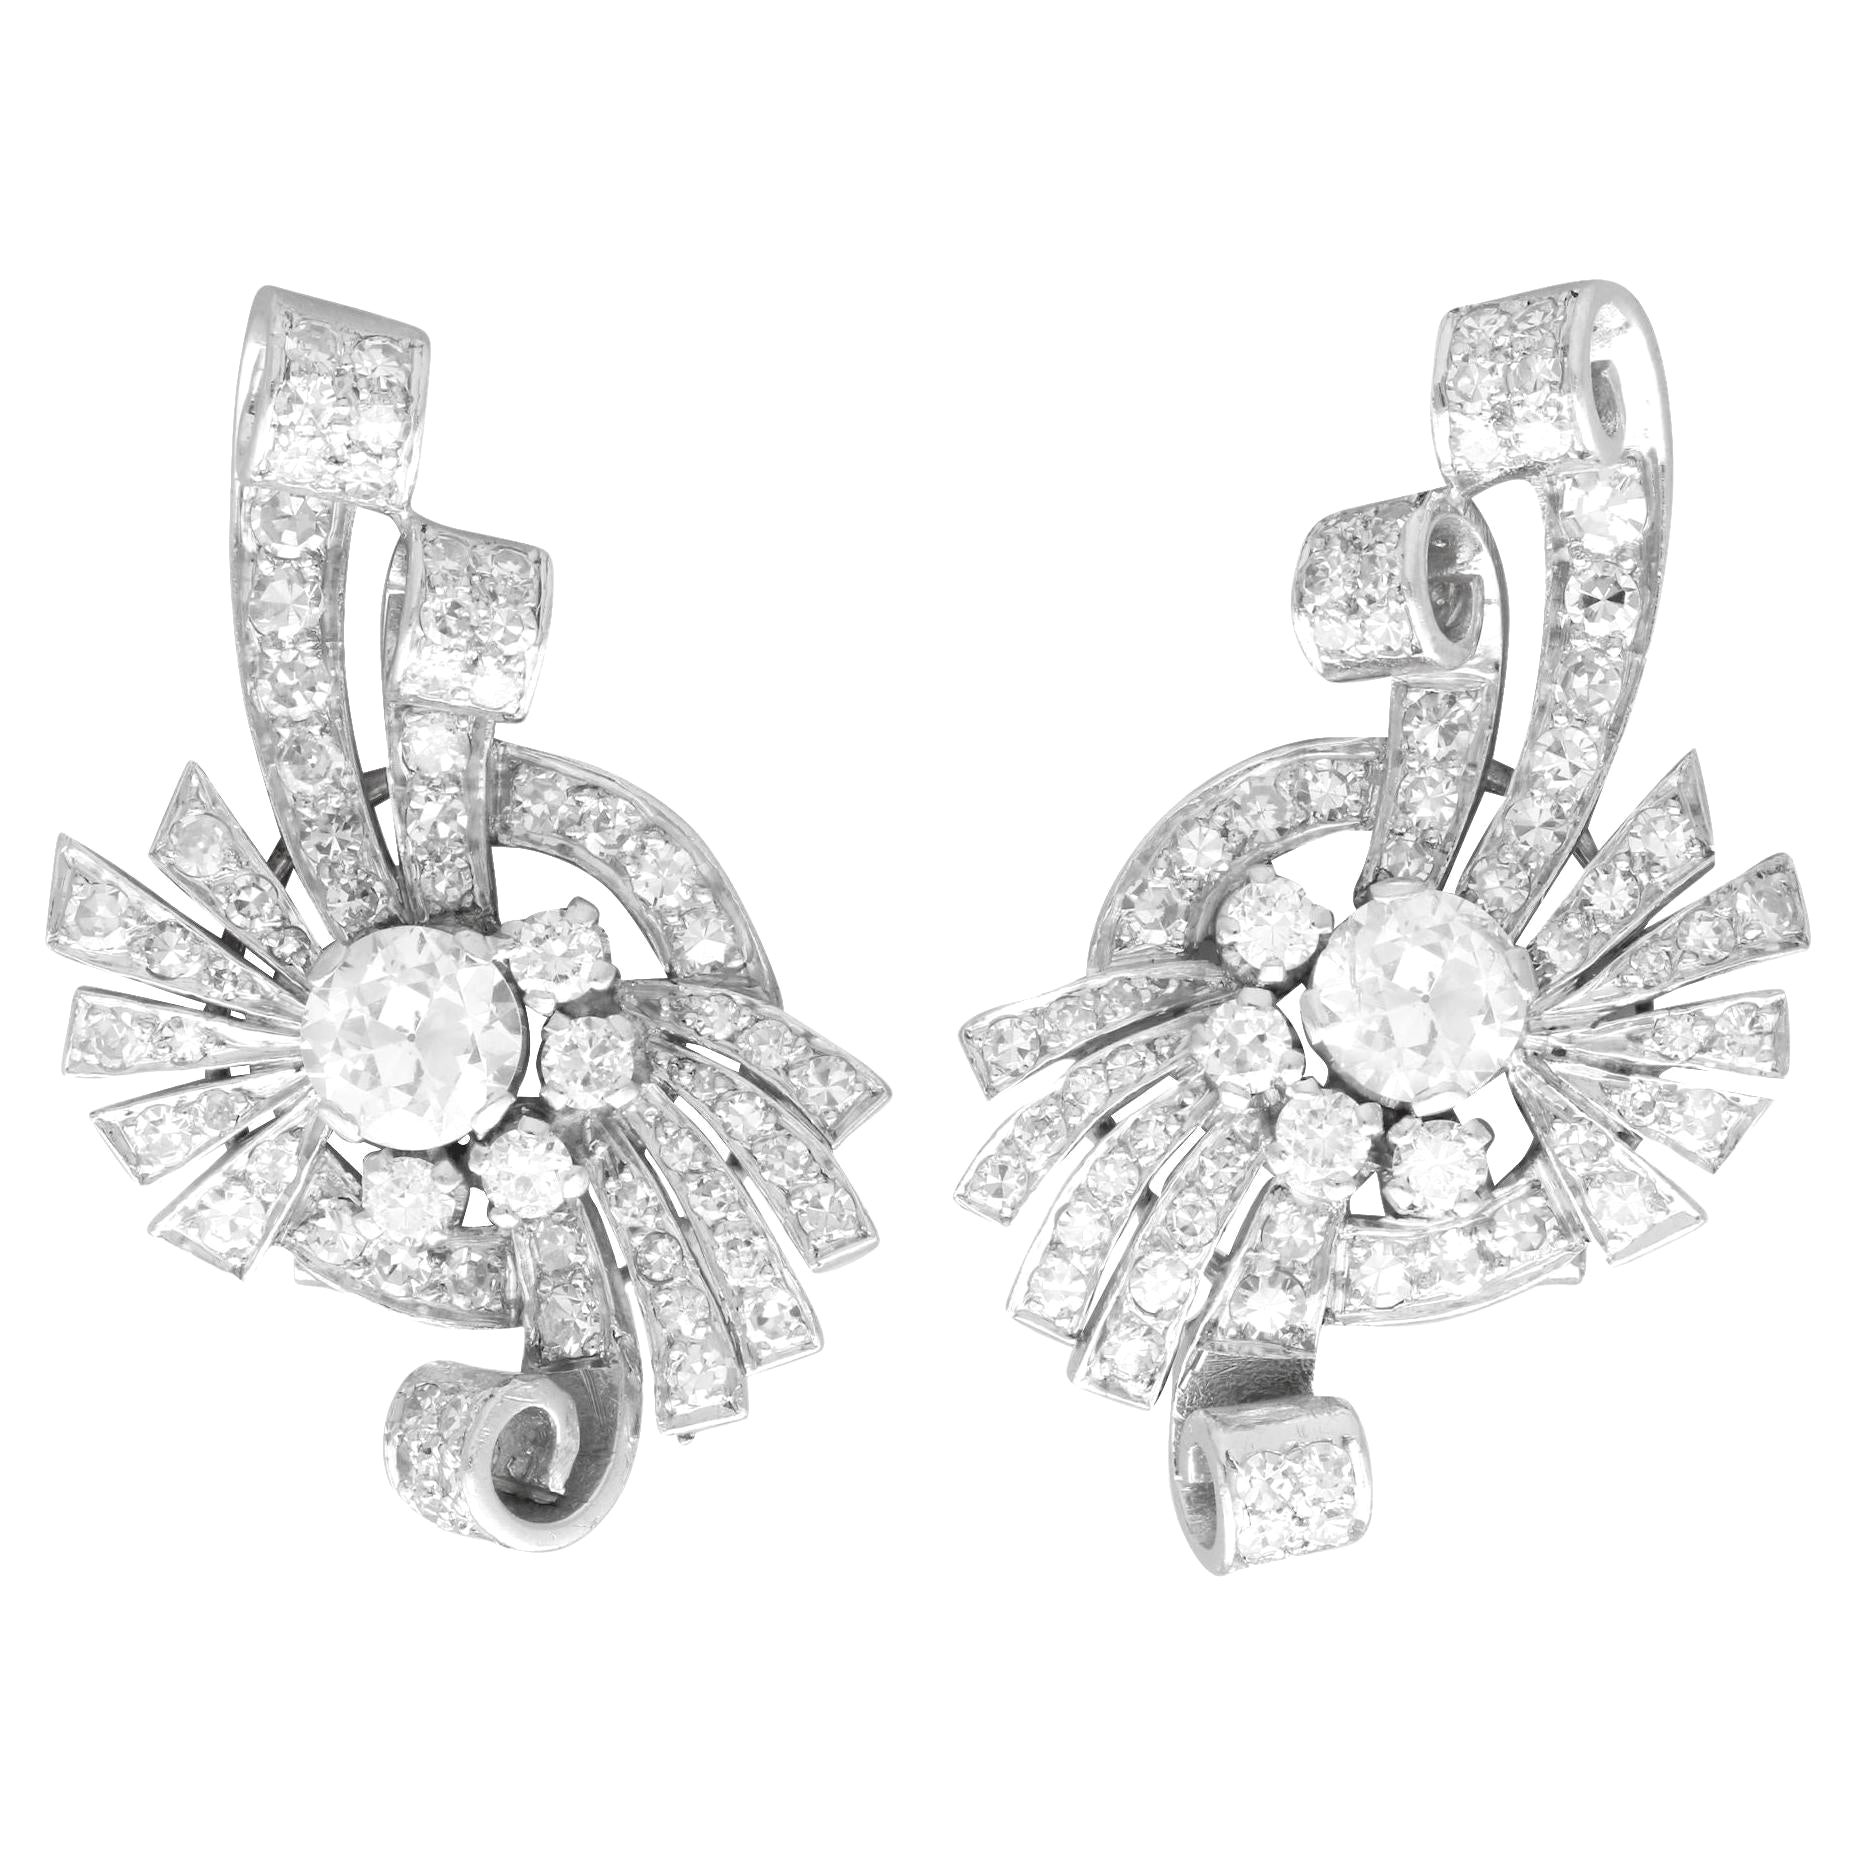 Art Deco 4.39 Carat Diamond and Platinum Earrings